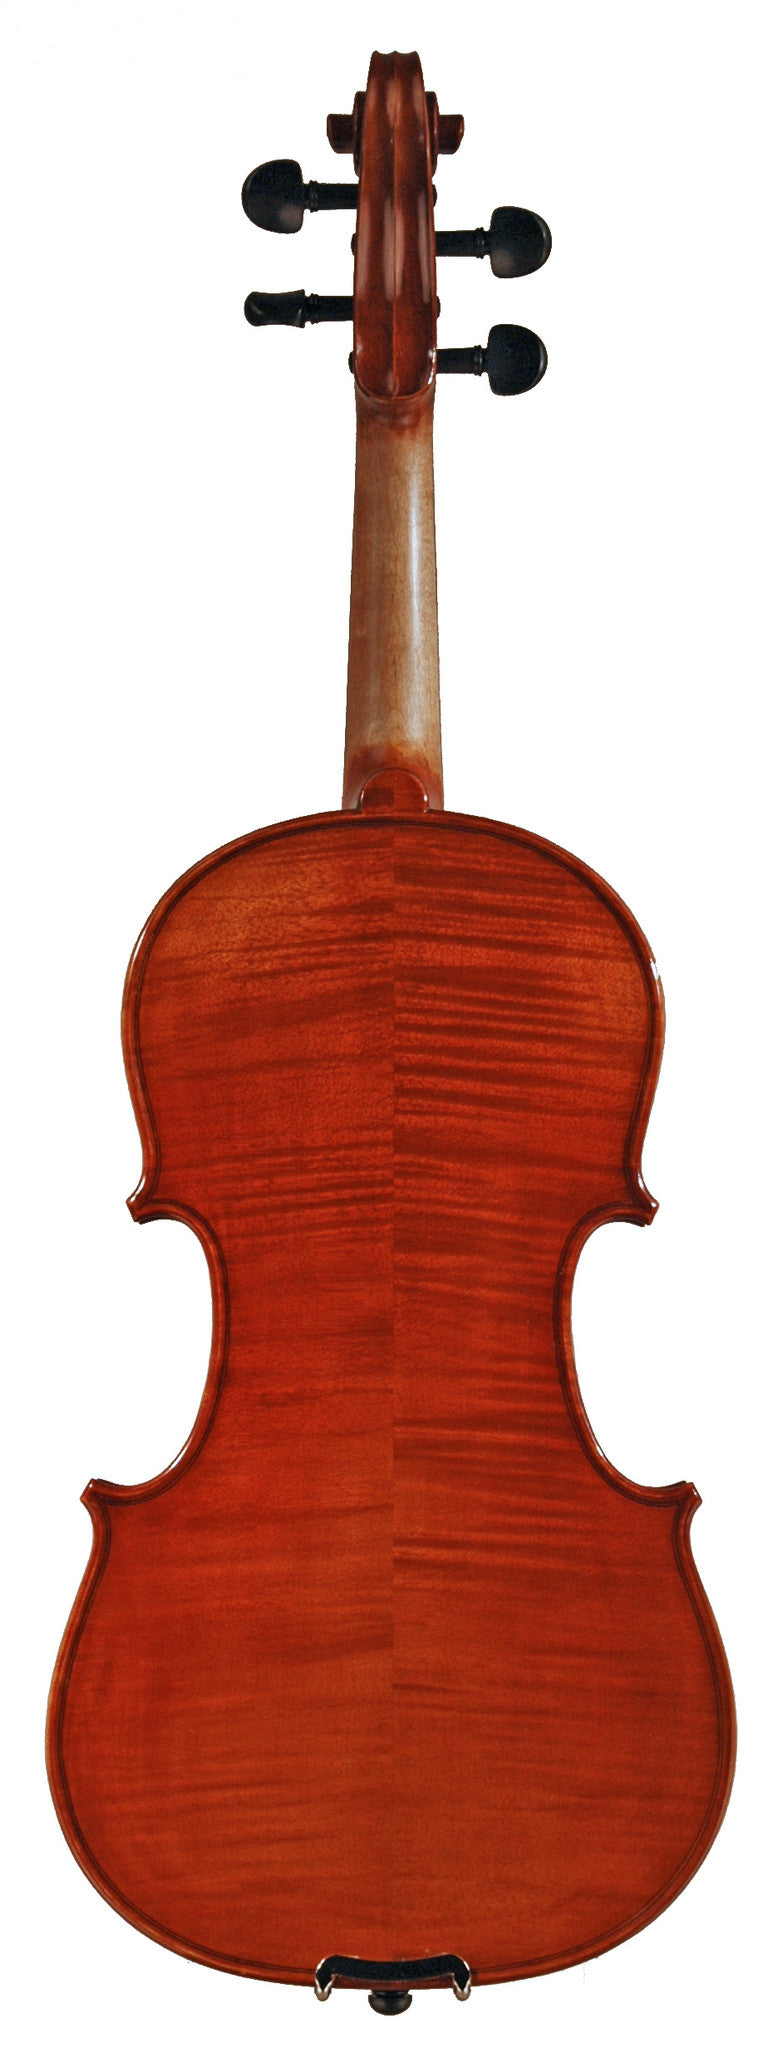 Virtuoso Violin